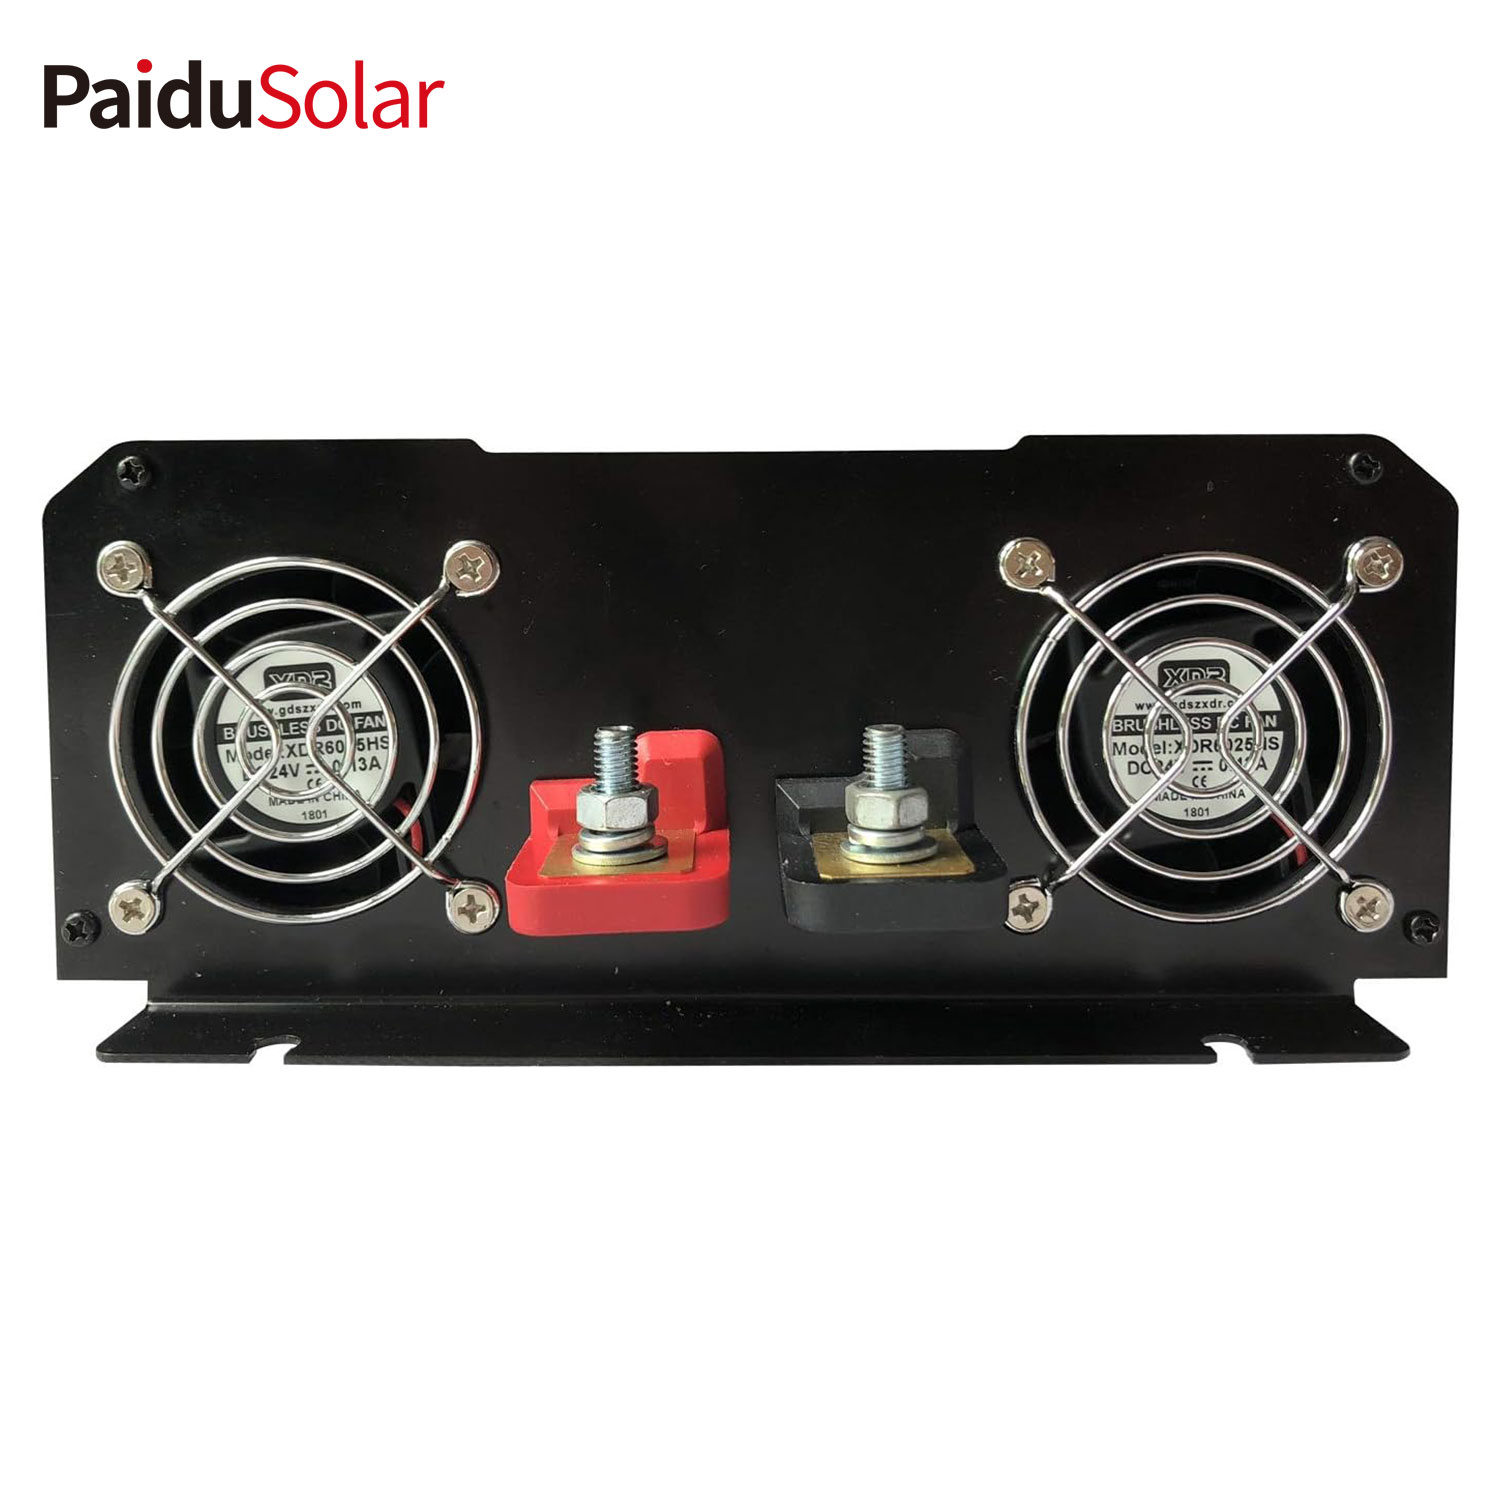 PaiduSolar 2000W 24V DC To 120V AC 60HZ Pure Sine Wave Off Grid Home Solar Power Inverter Converter